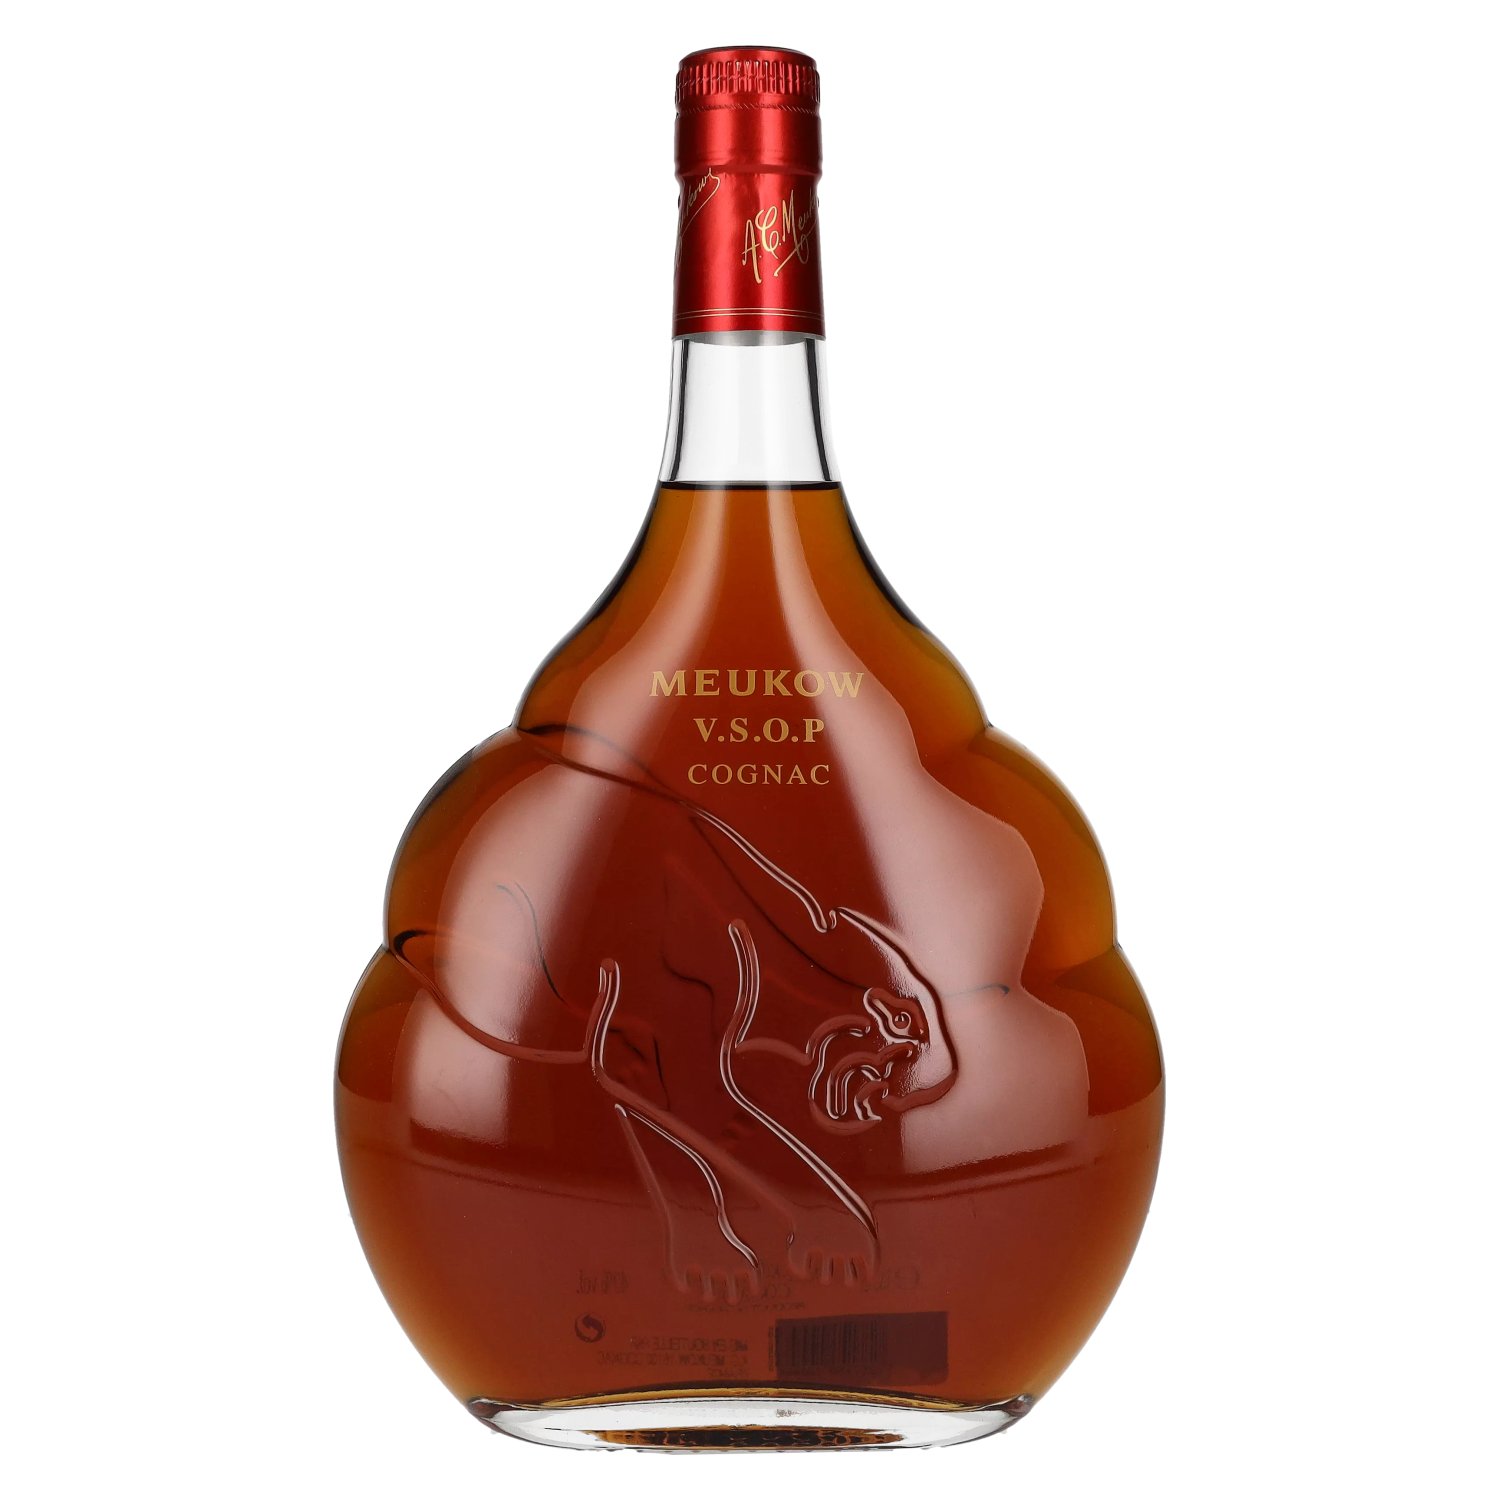 Meukow V.S.O.P Cognac 40% Vol. 1l - delicando